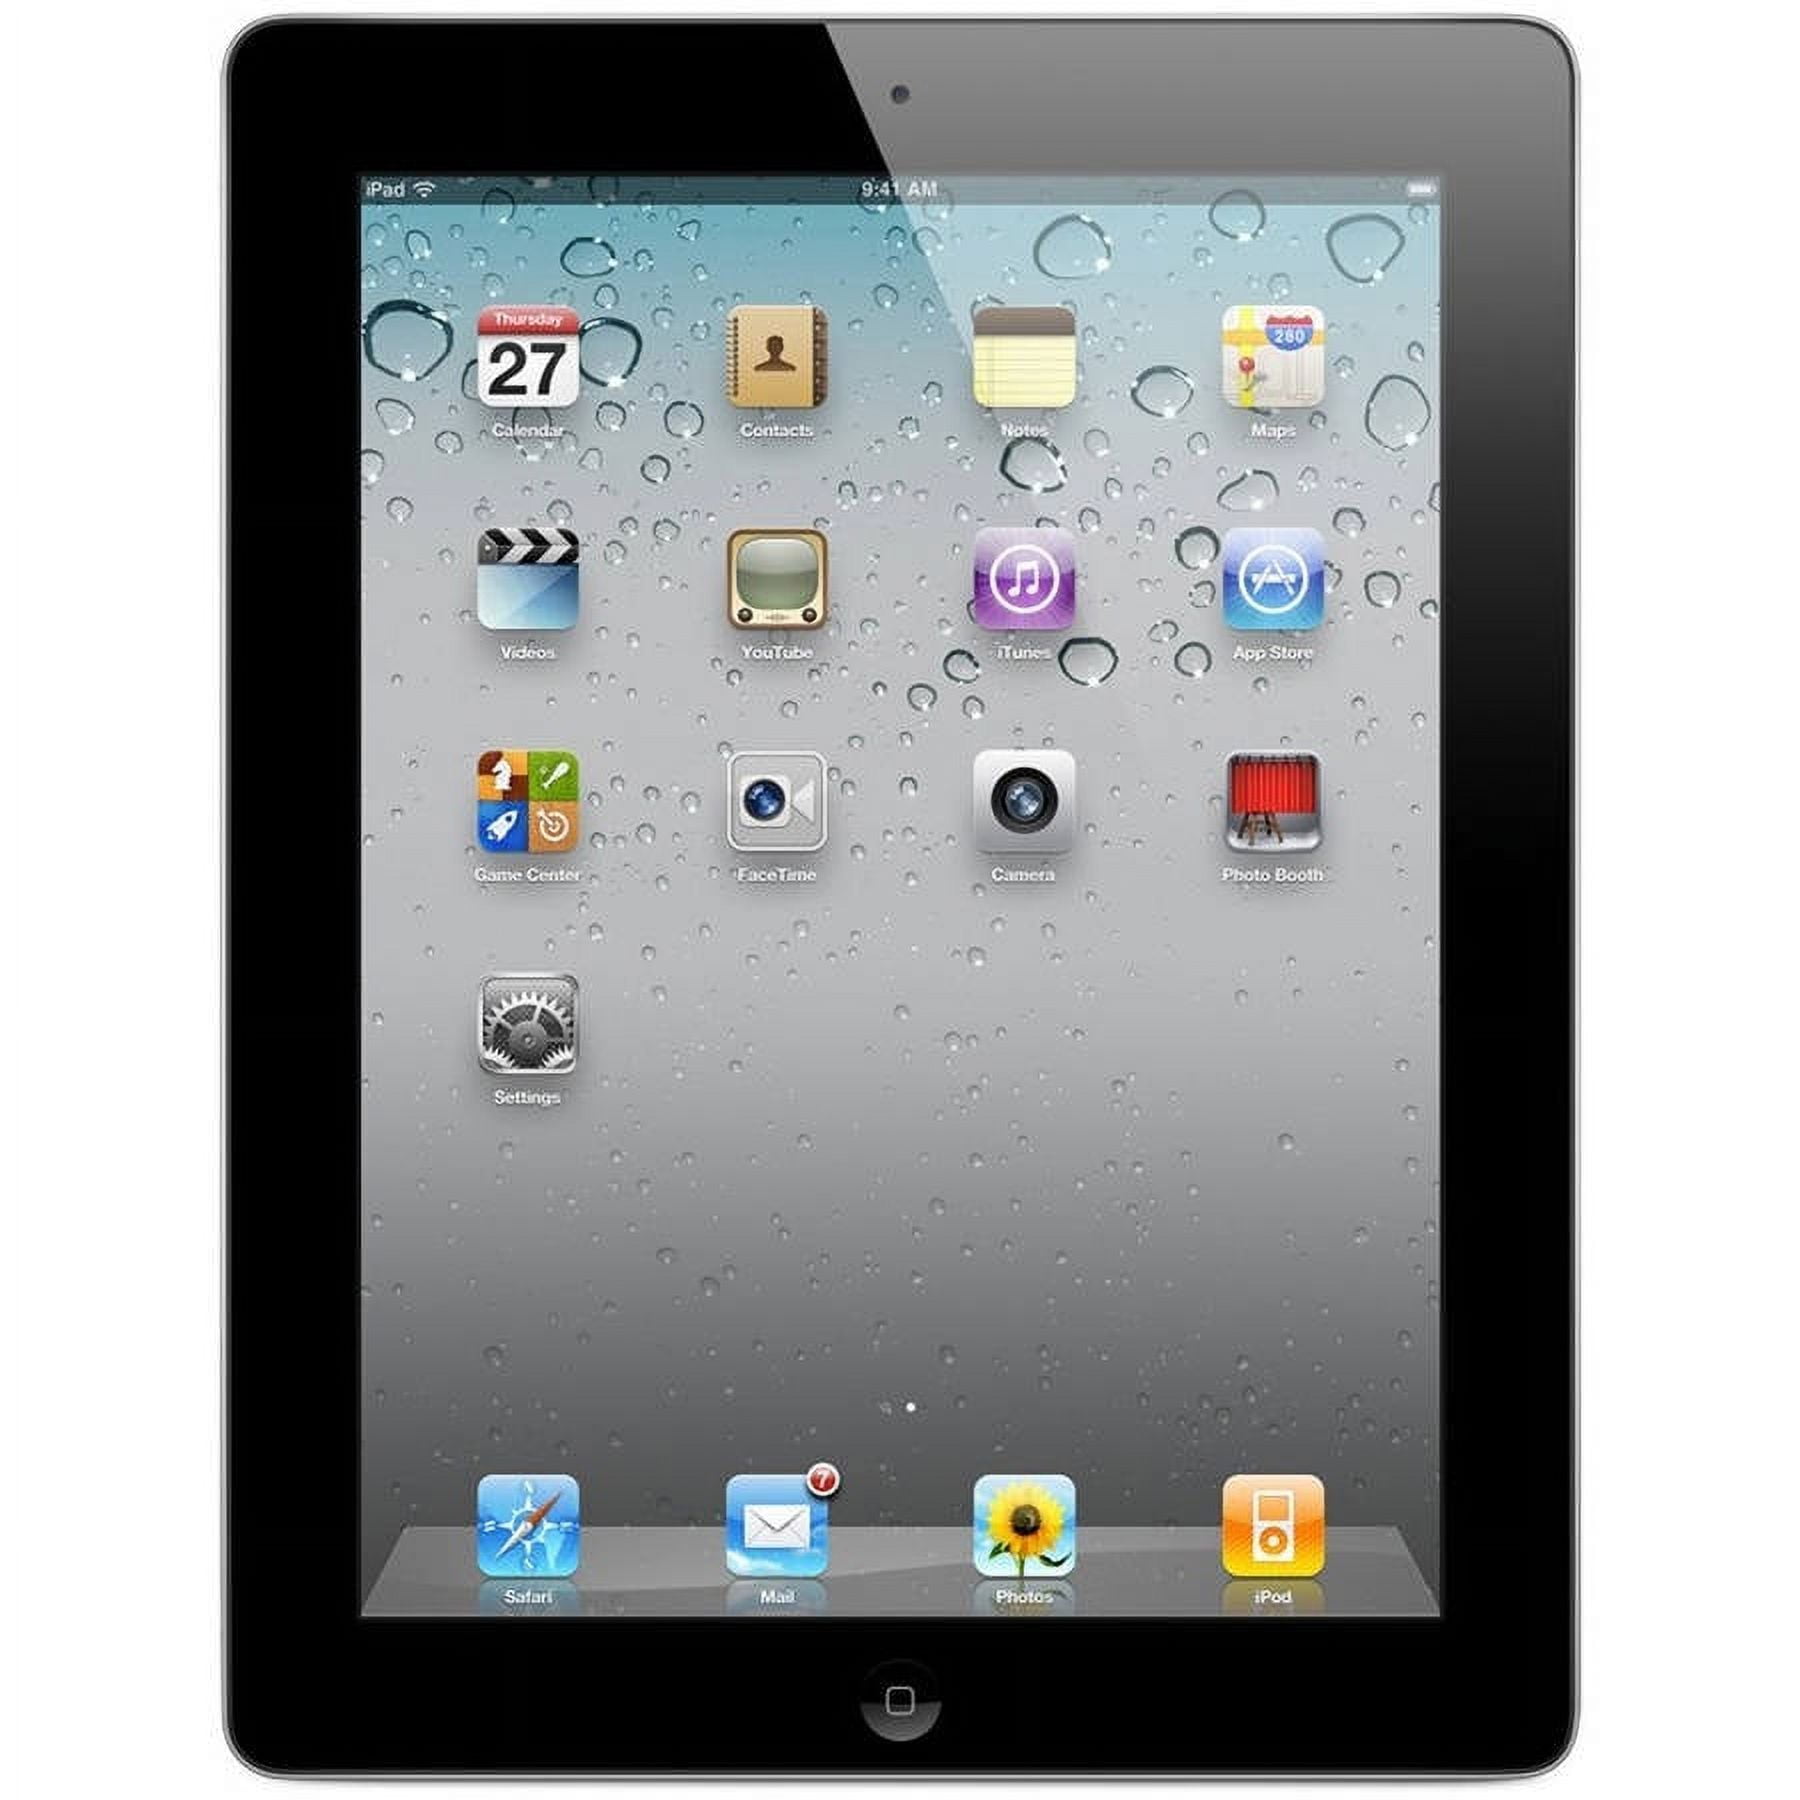 iPad reacondicionado - Apple iPad 4 16 Gb. Blanco (Wi-Fi+Celular) 9.7'', Reacondicionado, A6 1GHz, 1 GB RAM